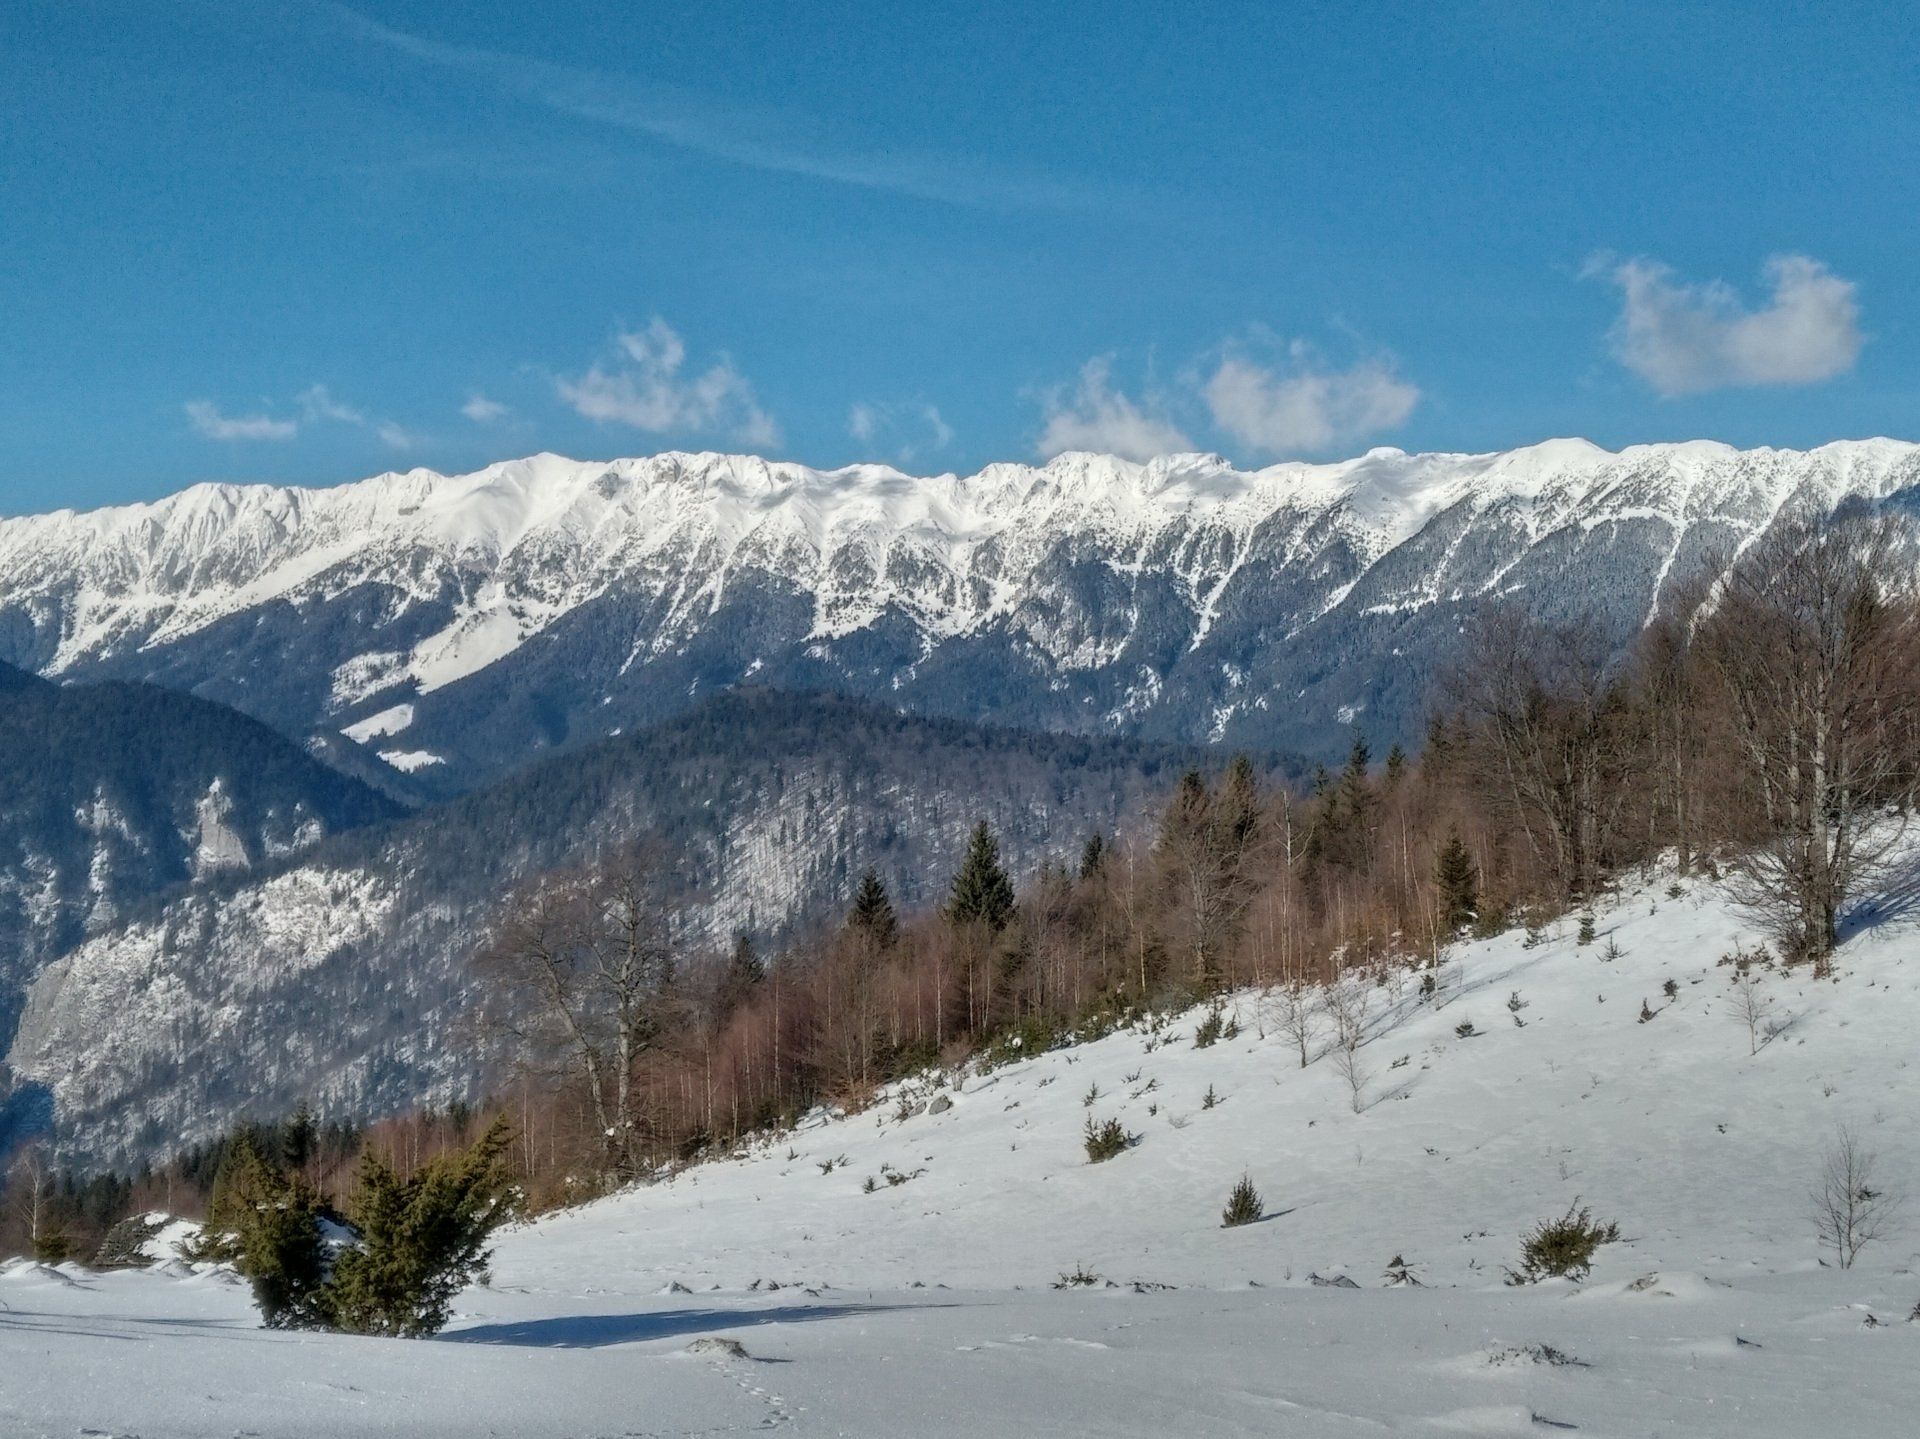 Main ridge of Piatra Craiului National Park - photo made from Magura village